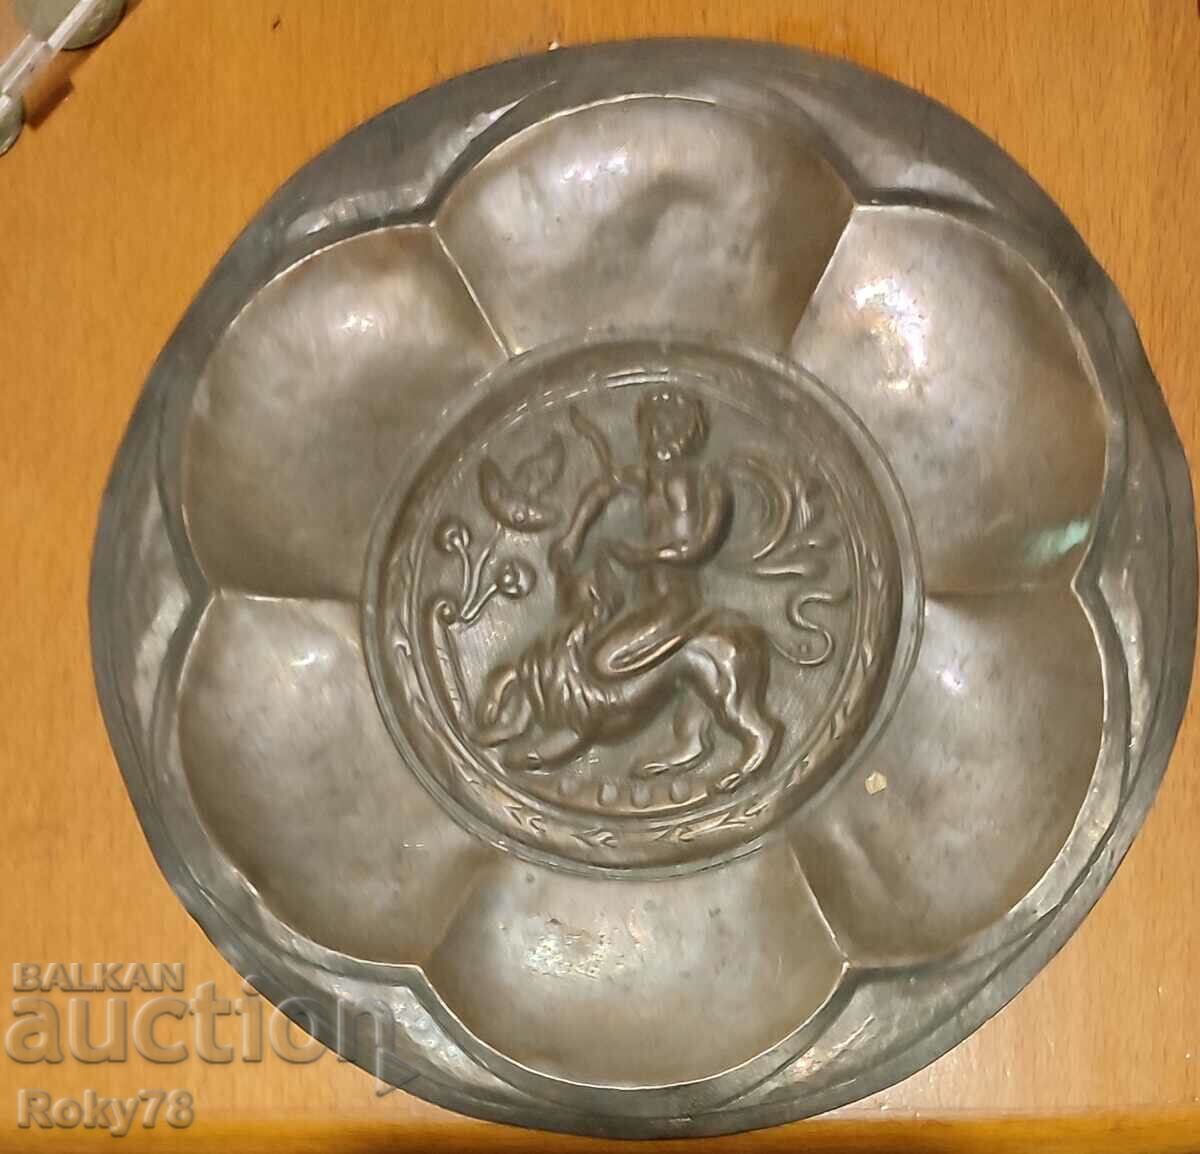 Old copper plate, diameter 17 cm, 80 g.